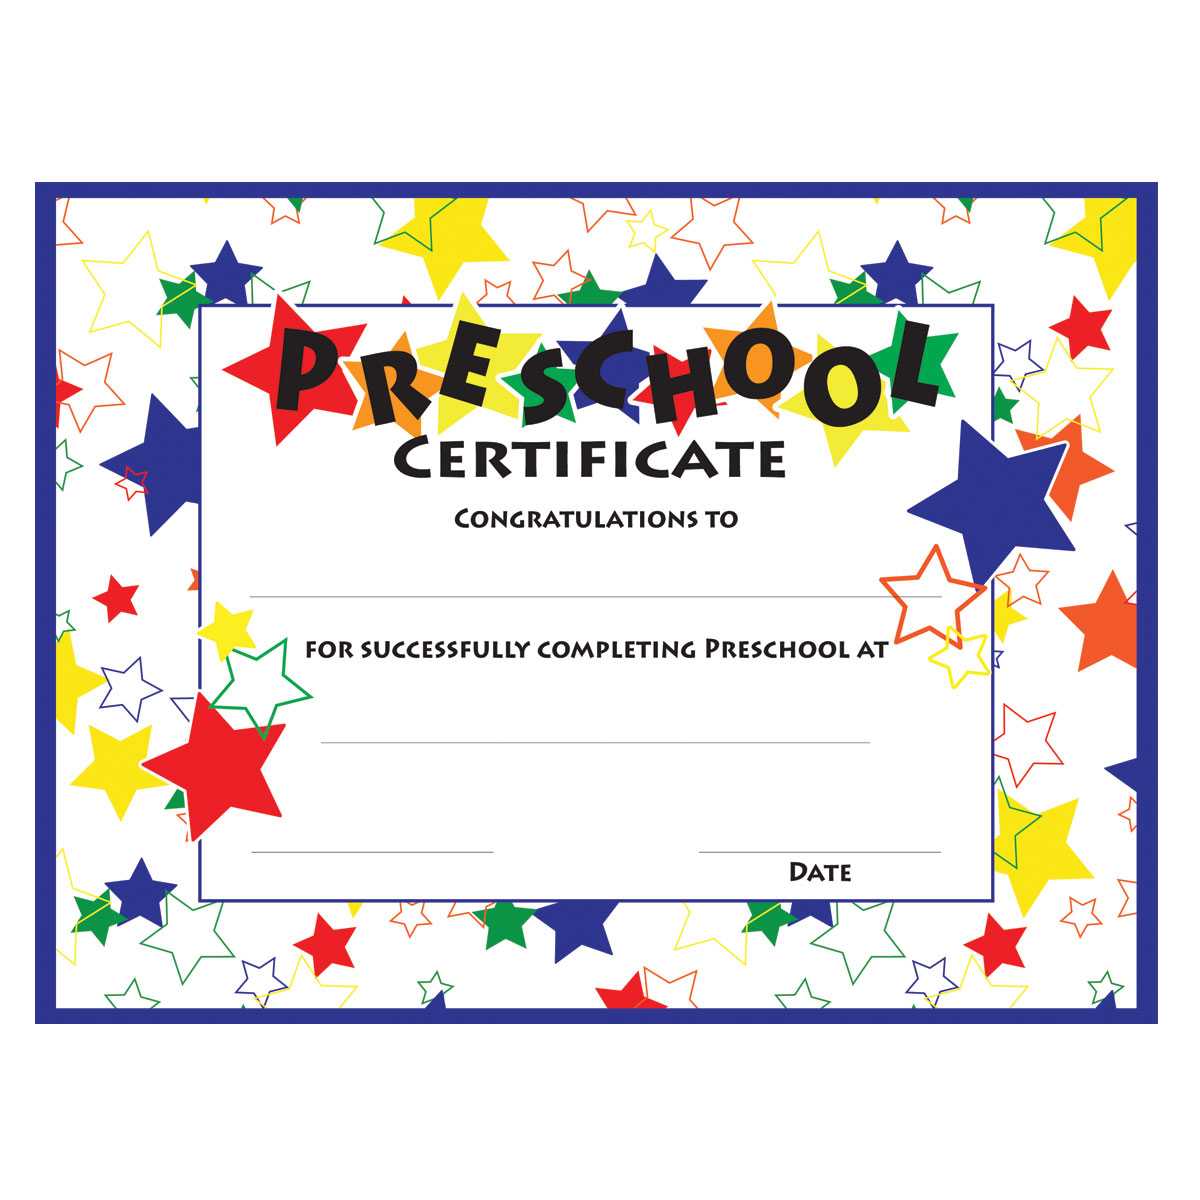 11+ Preschool Certificate Templates - Pdf | Free & Premium Throughout Preschool Graduation Certificate Template Free